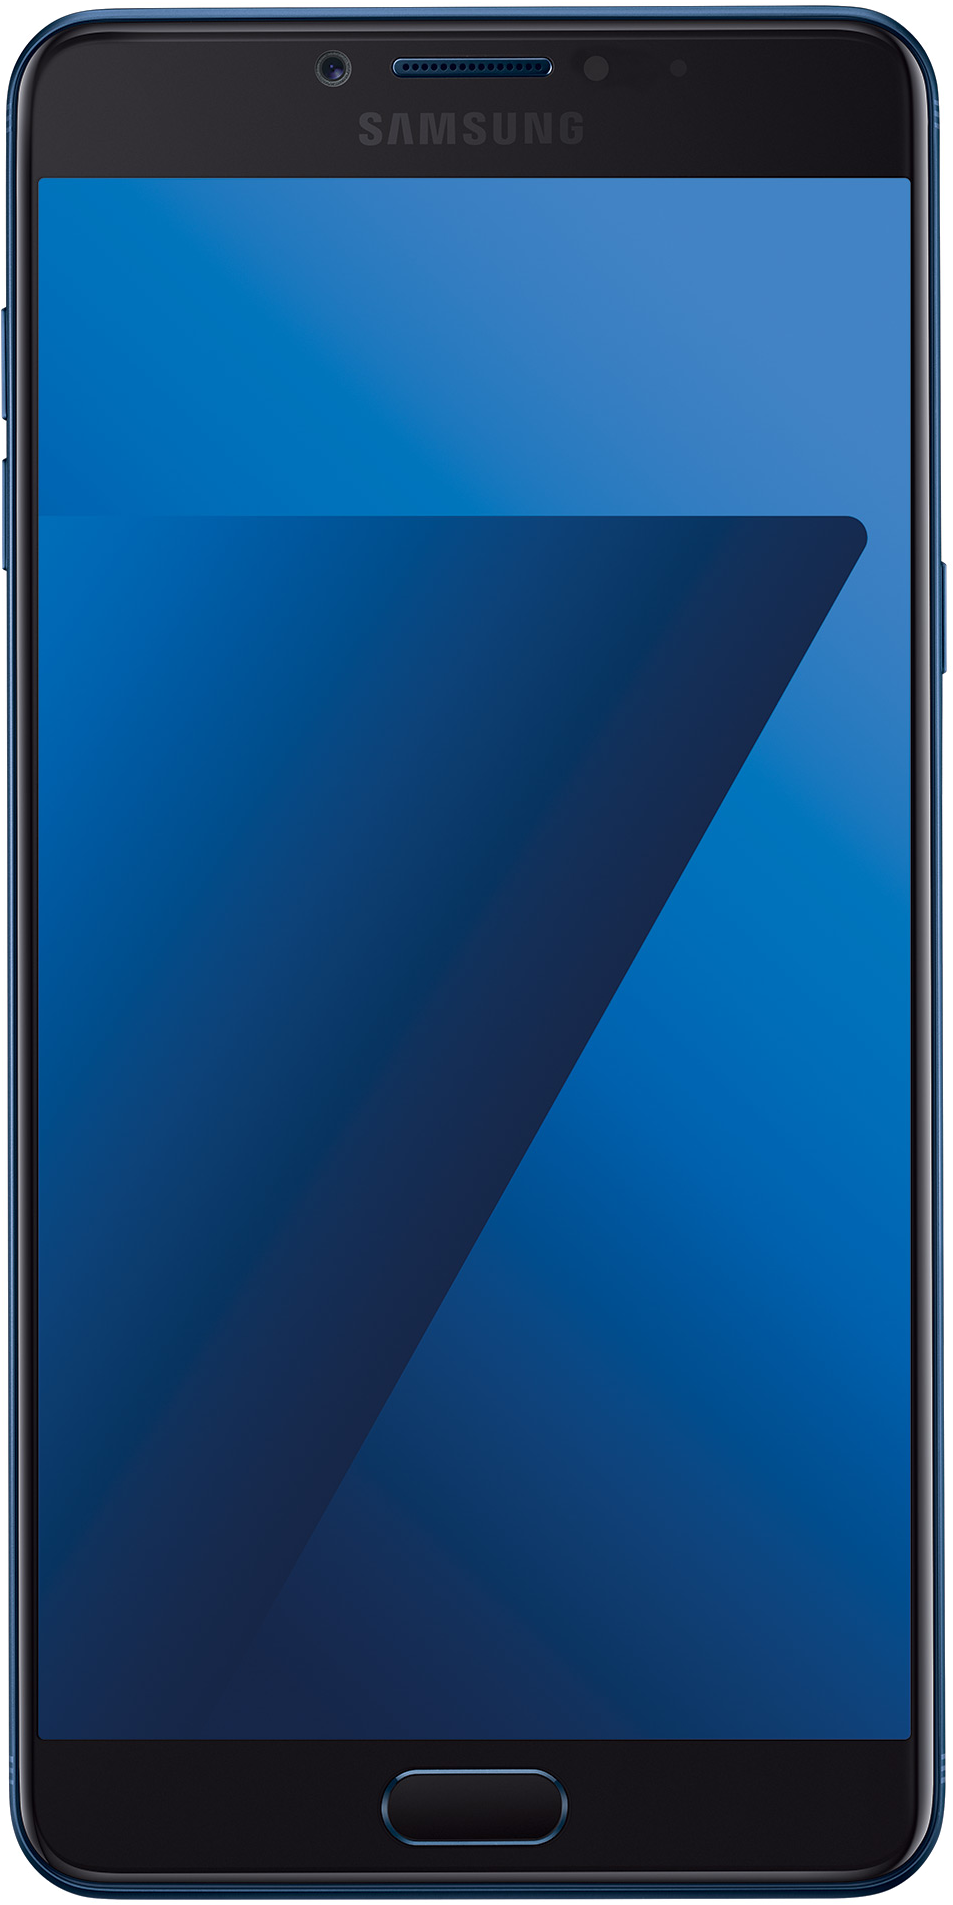 Smartphone Clipart Mobail - Samsung Galaxy C7 Pro (3000x2000)